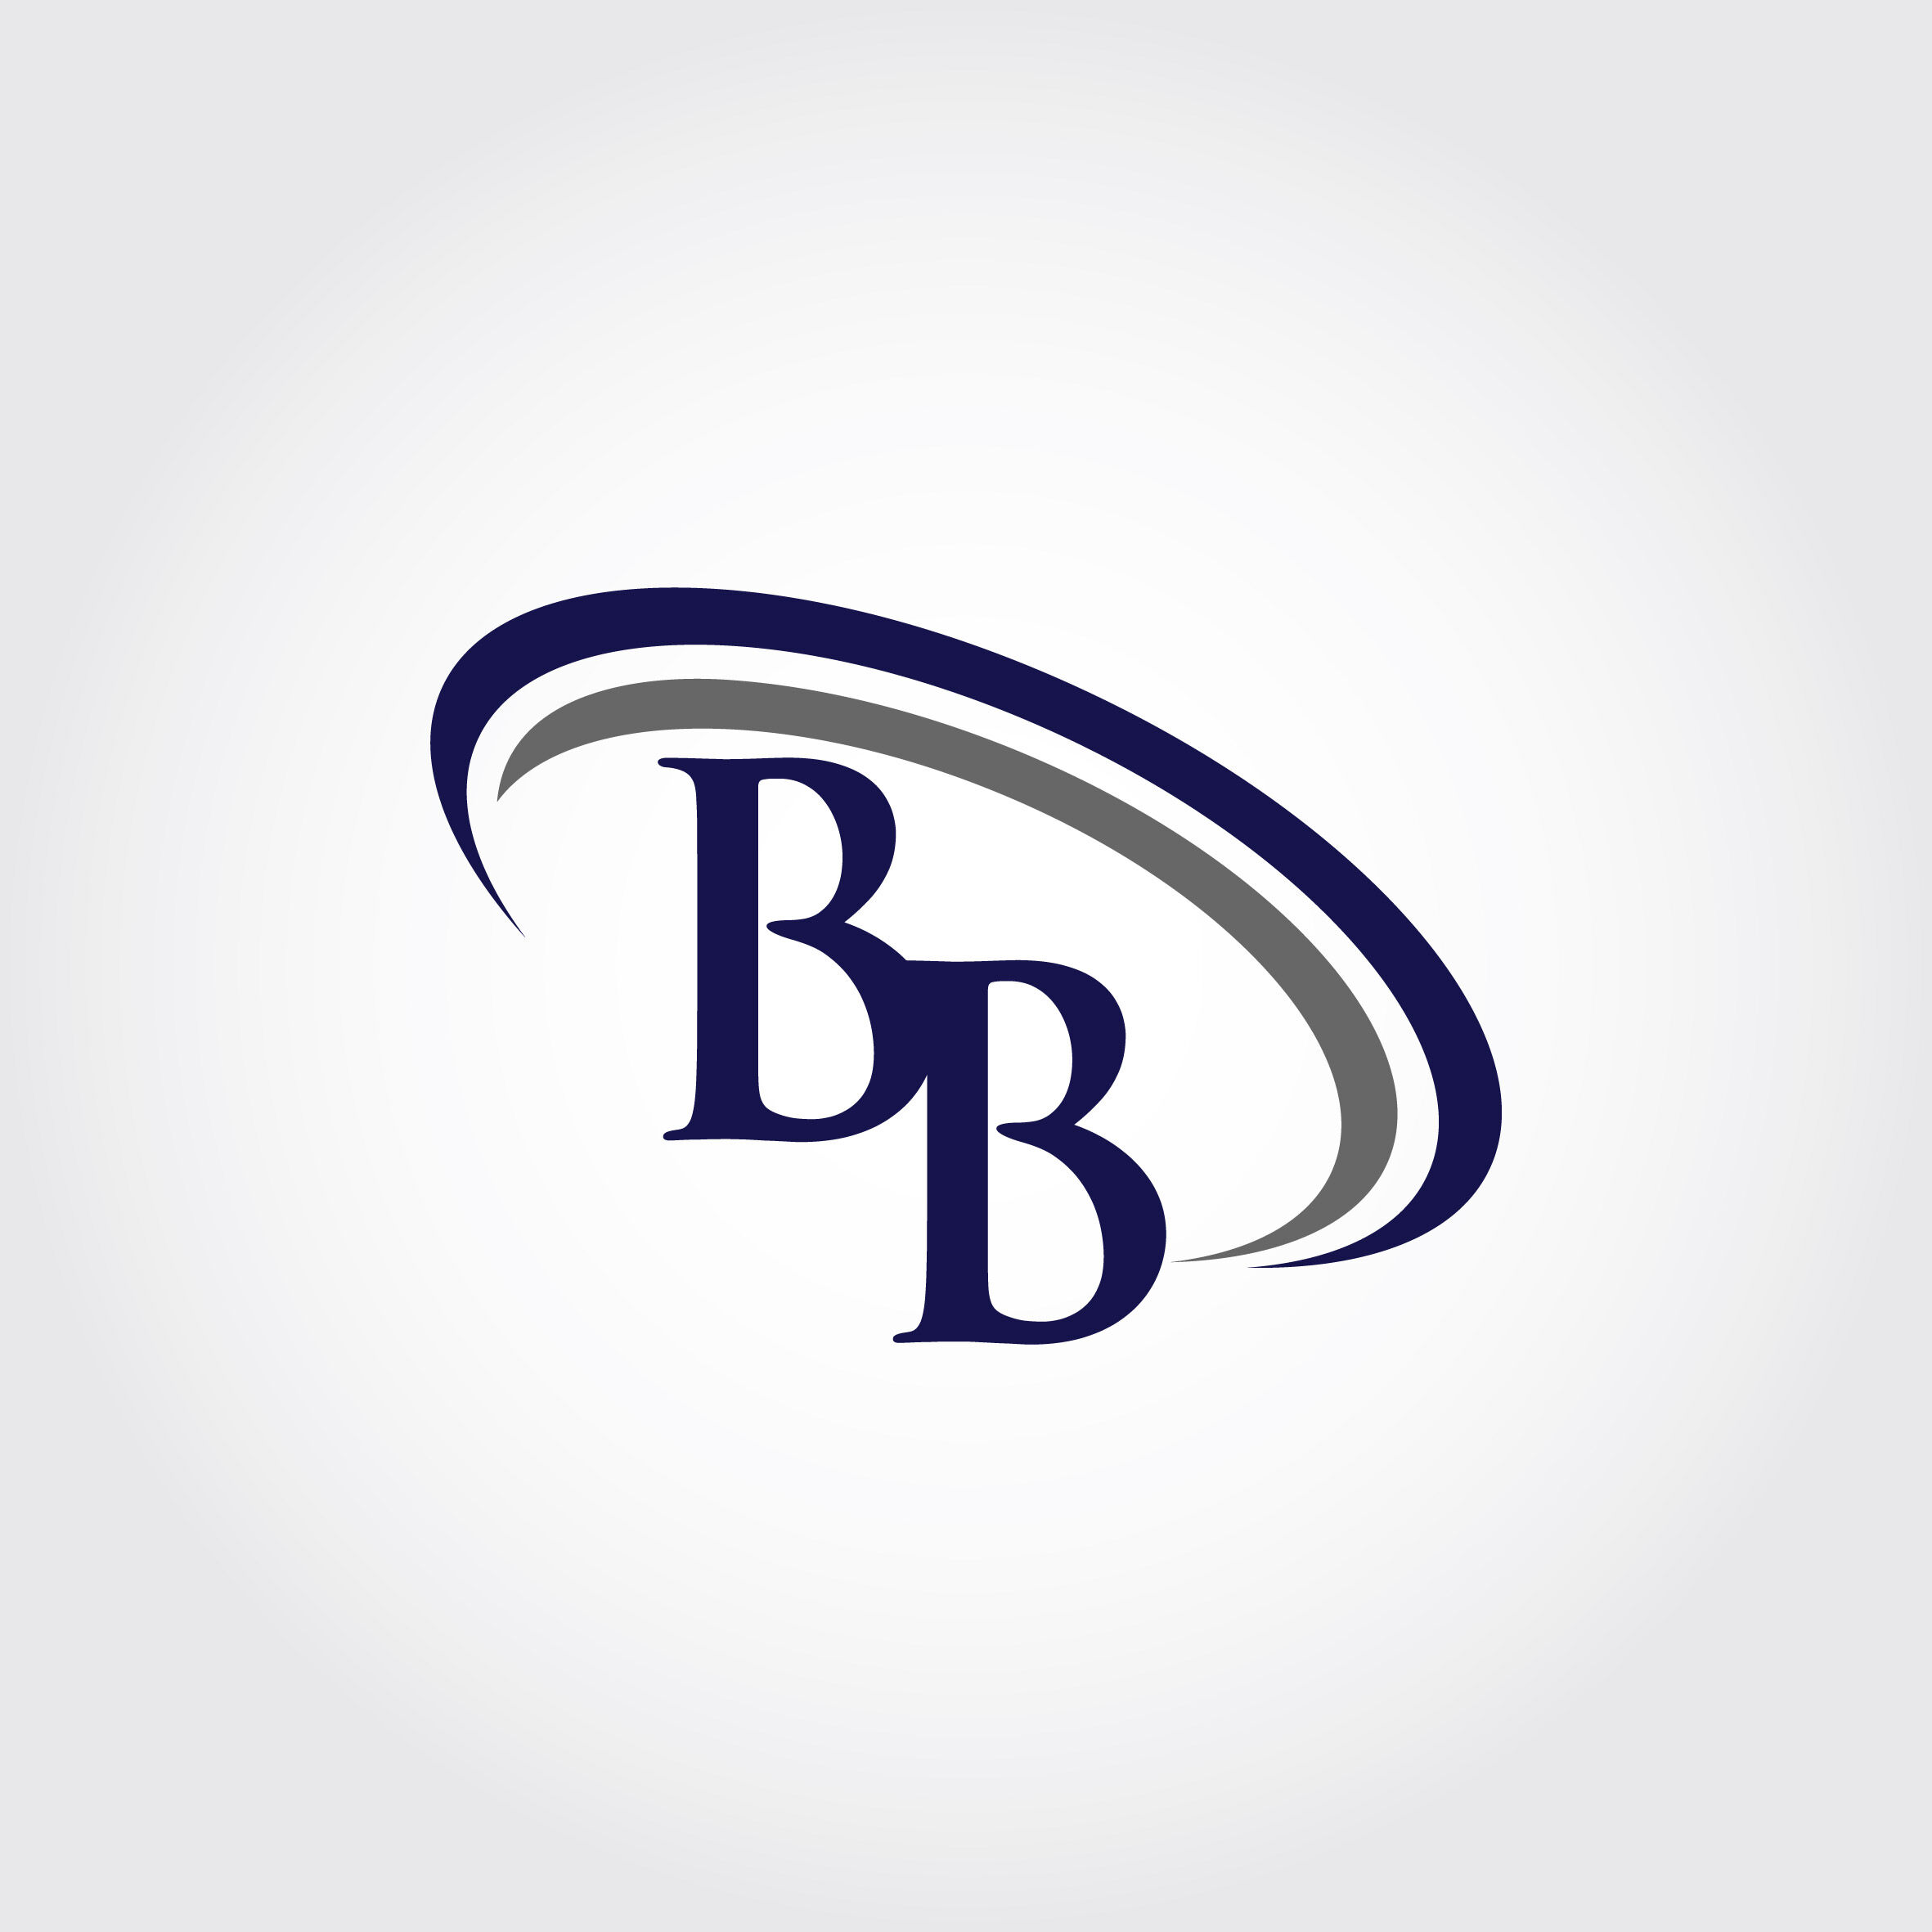 monogram-bb-logo-design-by-vectorseller-thehungryjpeg